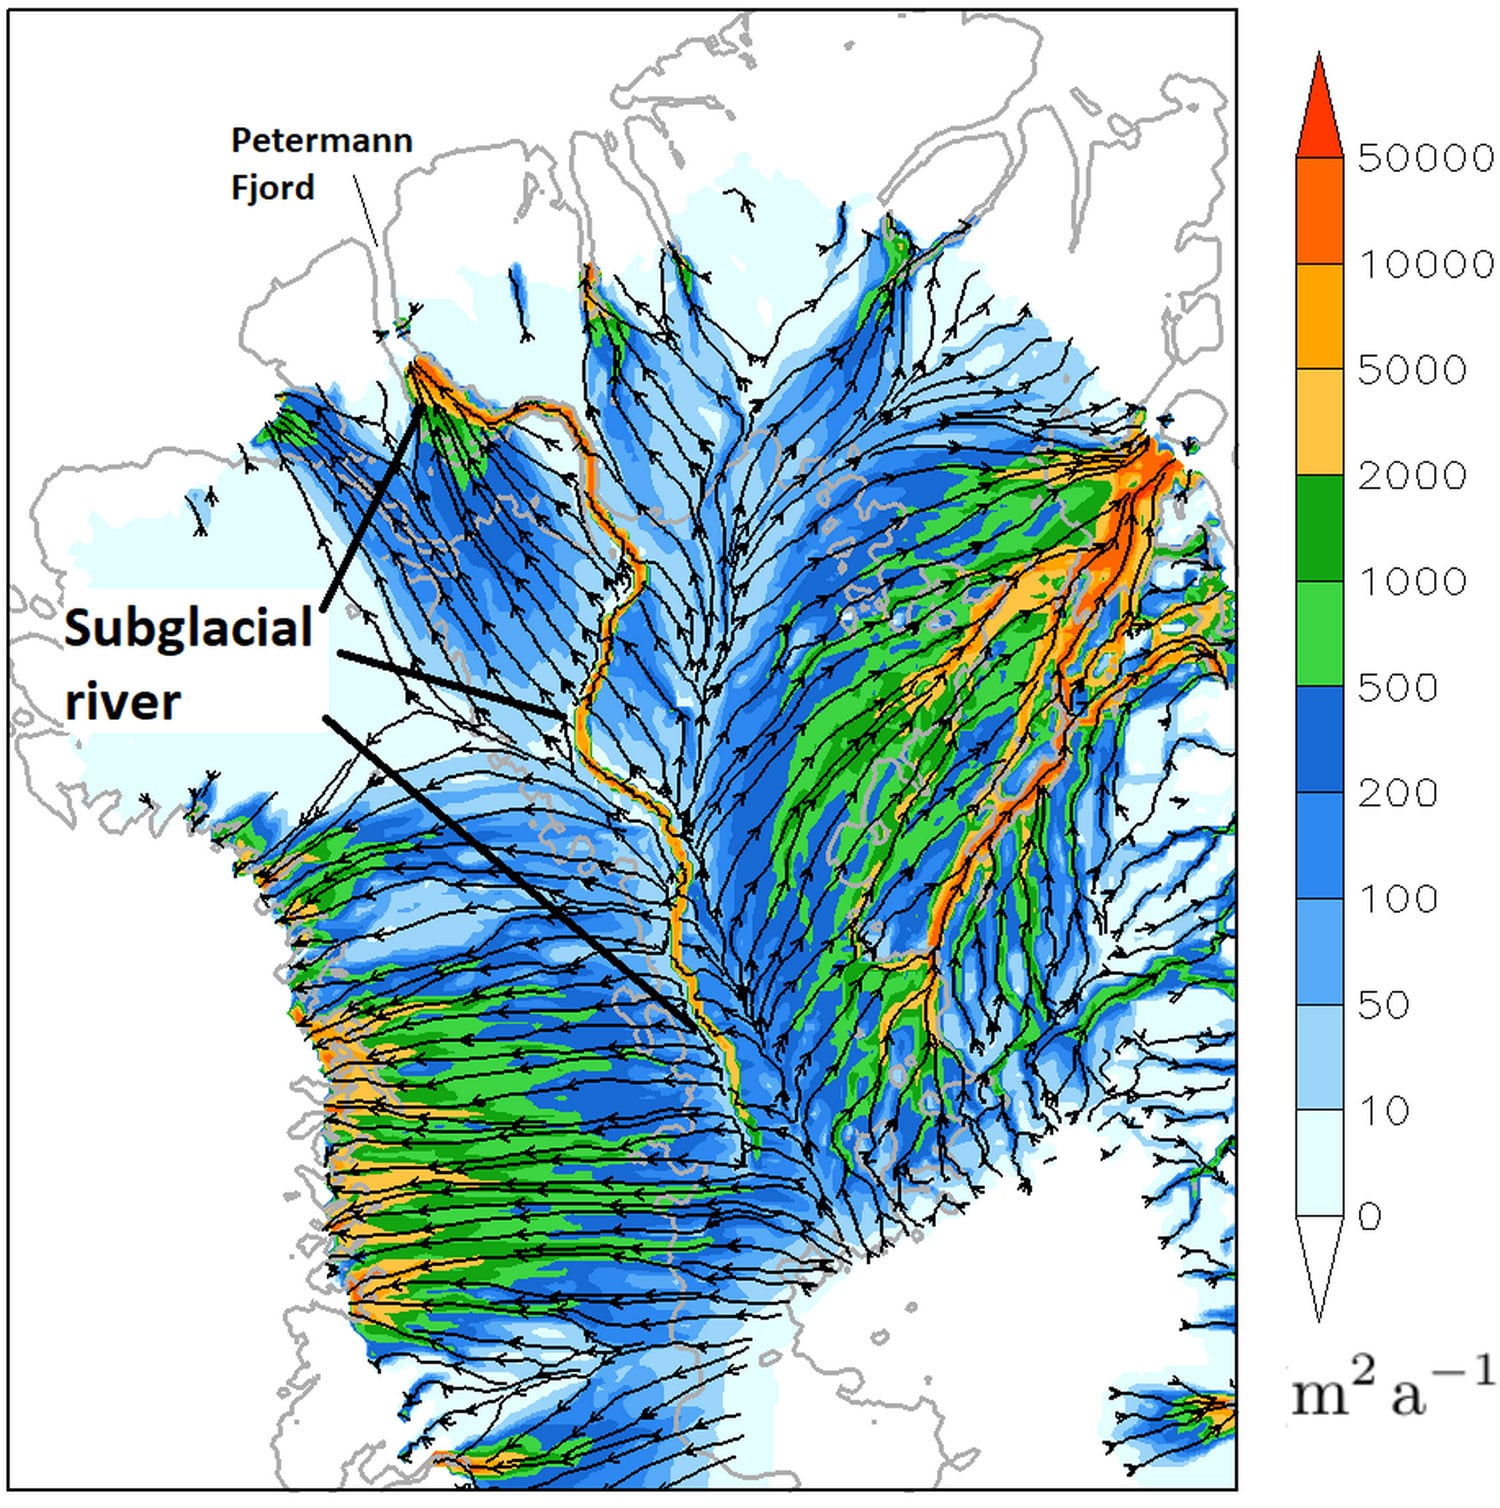 Possibly 1000 km long river running deep below Greenland's ice sheet